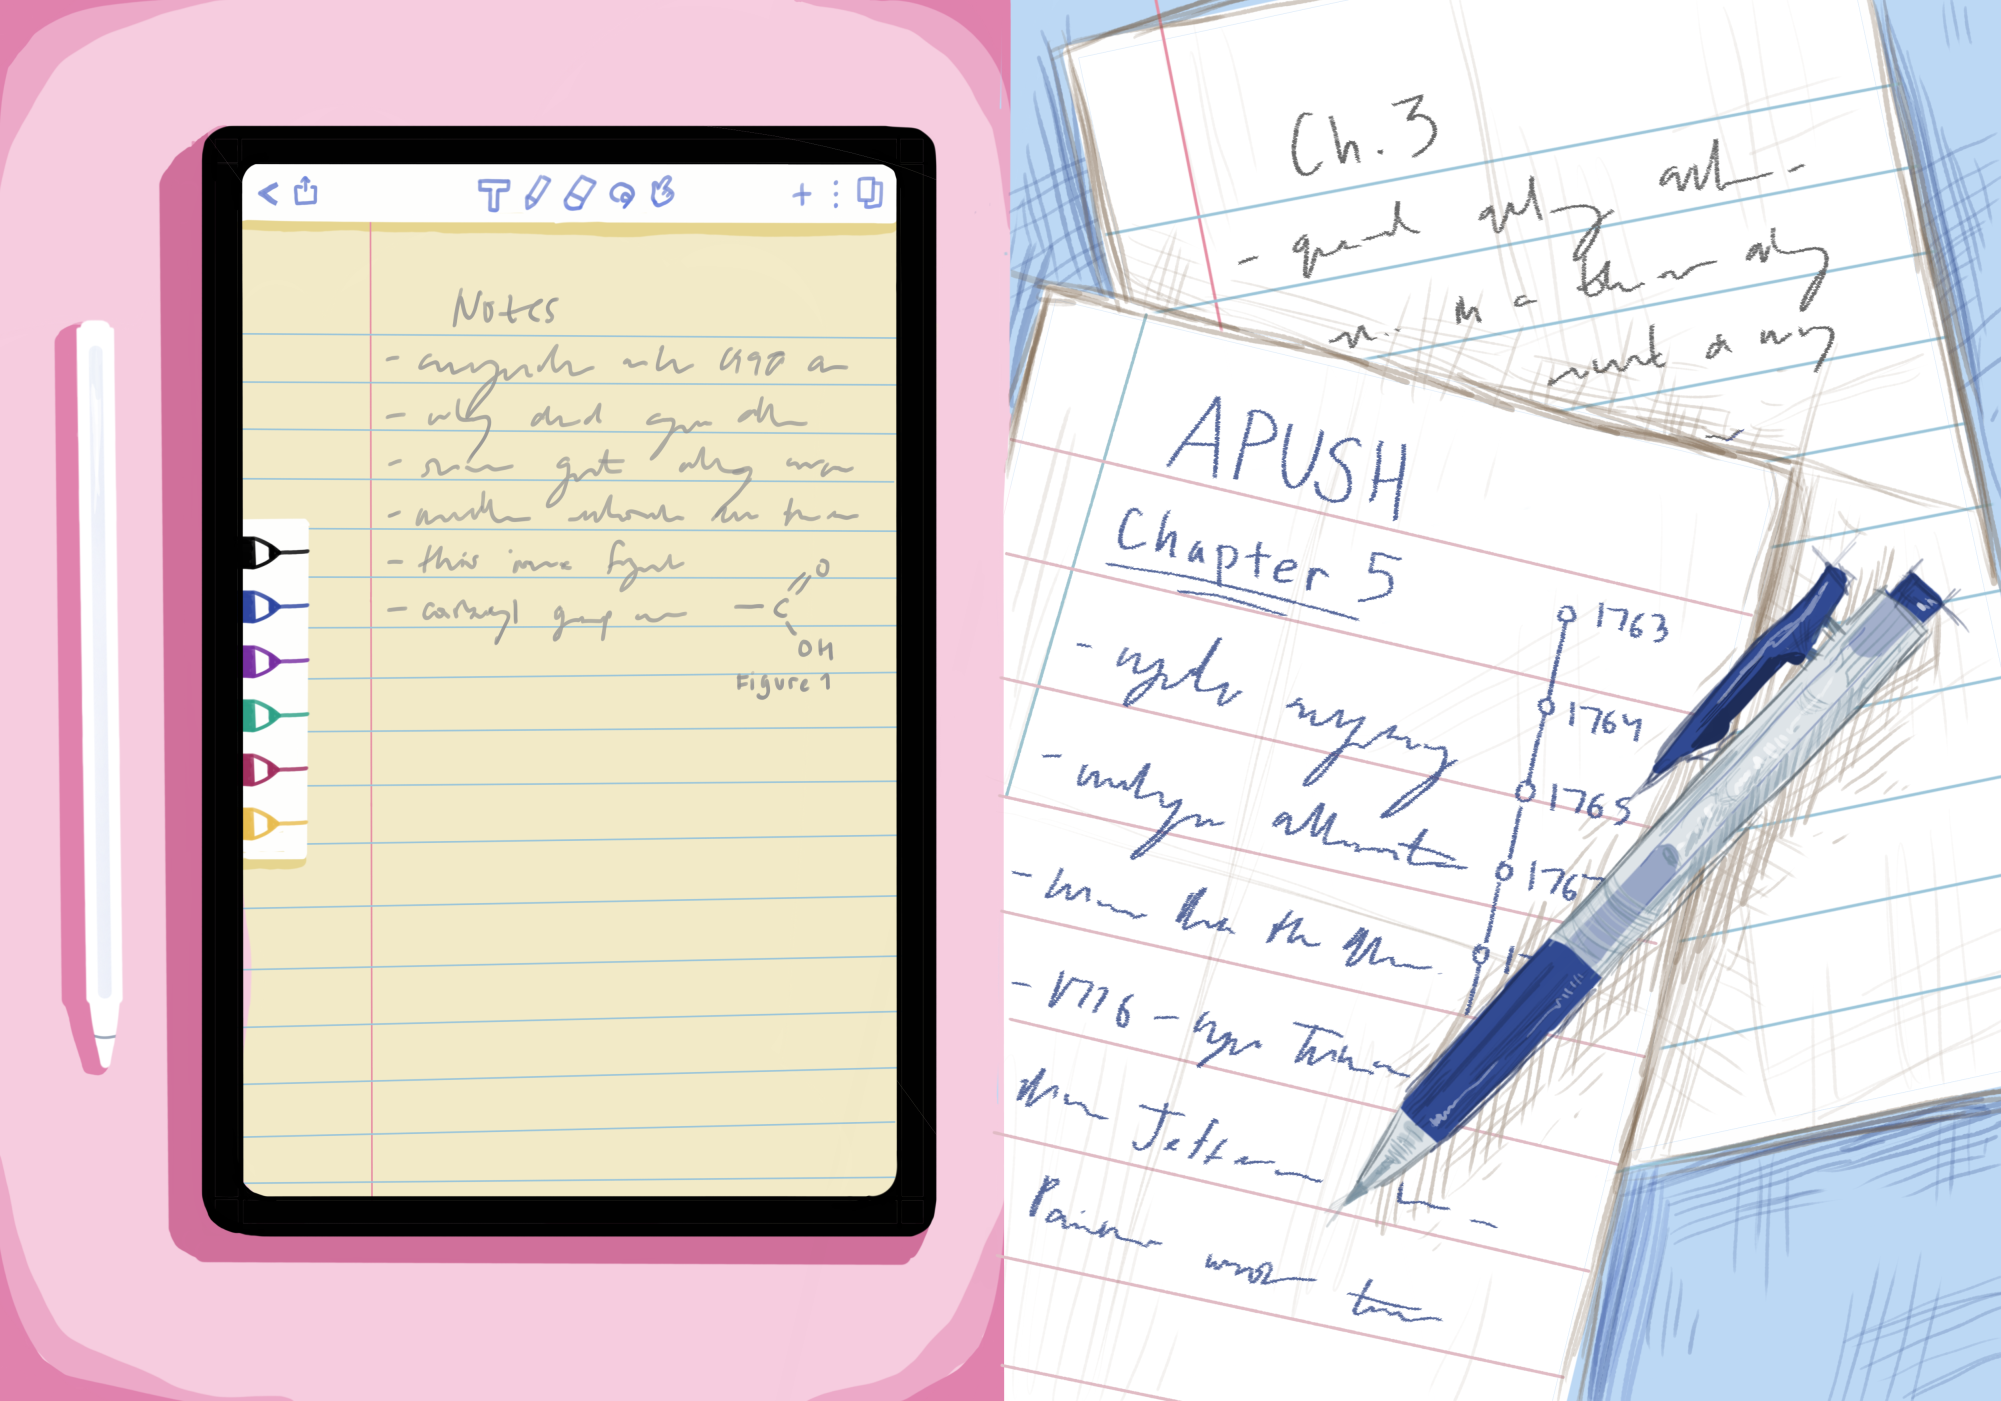 Perspectives: iPad vs. paper notes